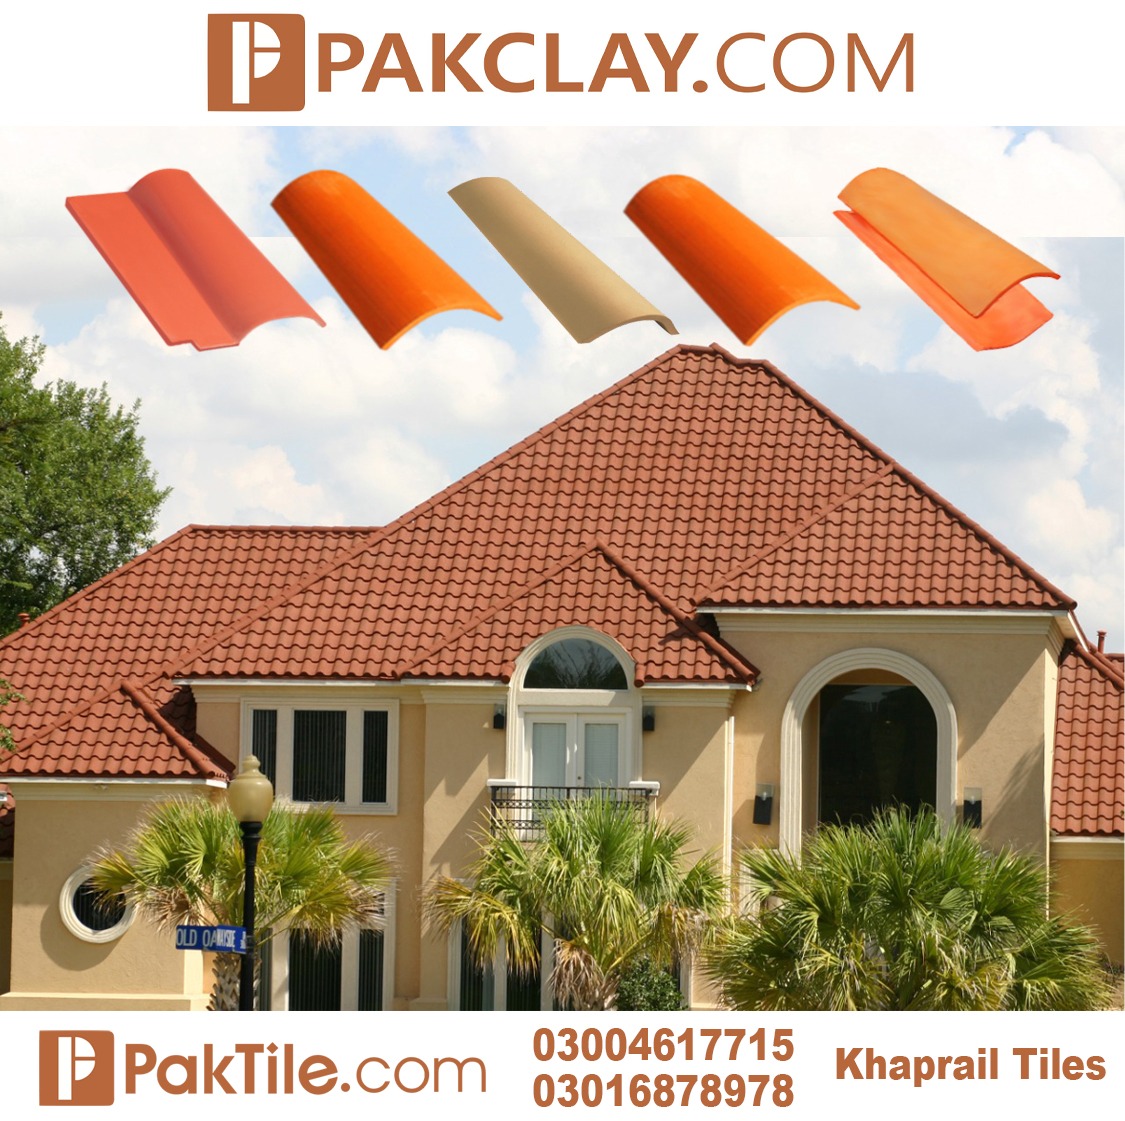 Pak clay roof tiles design